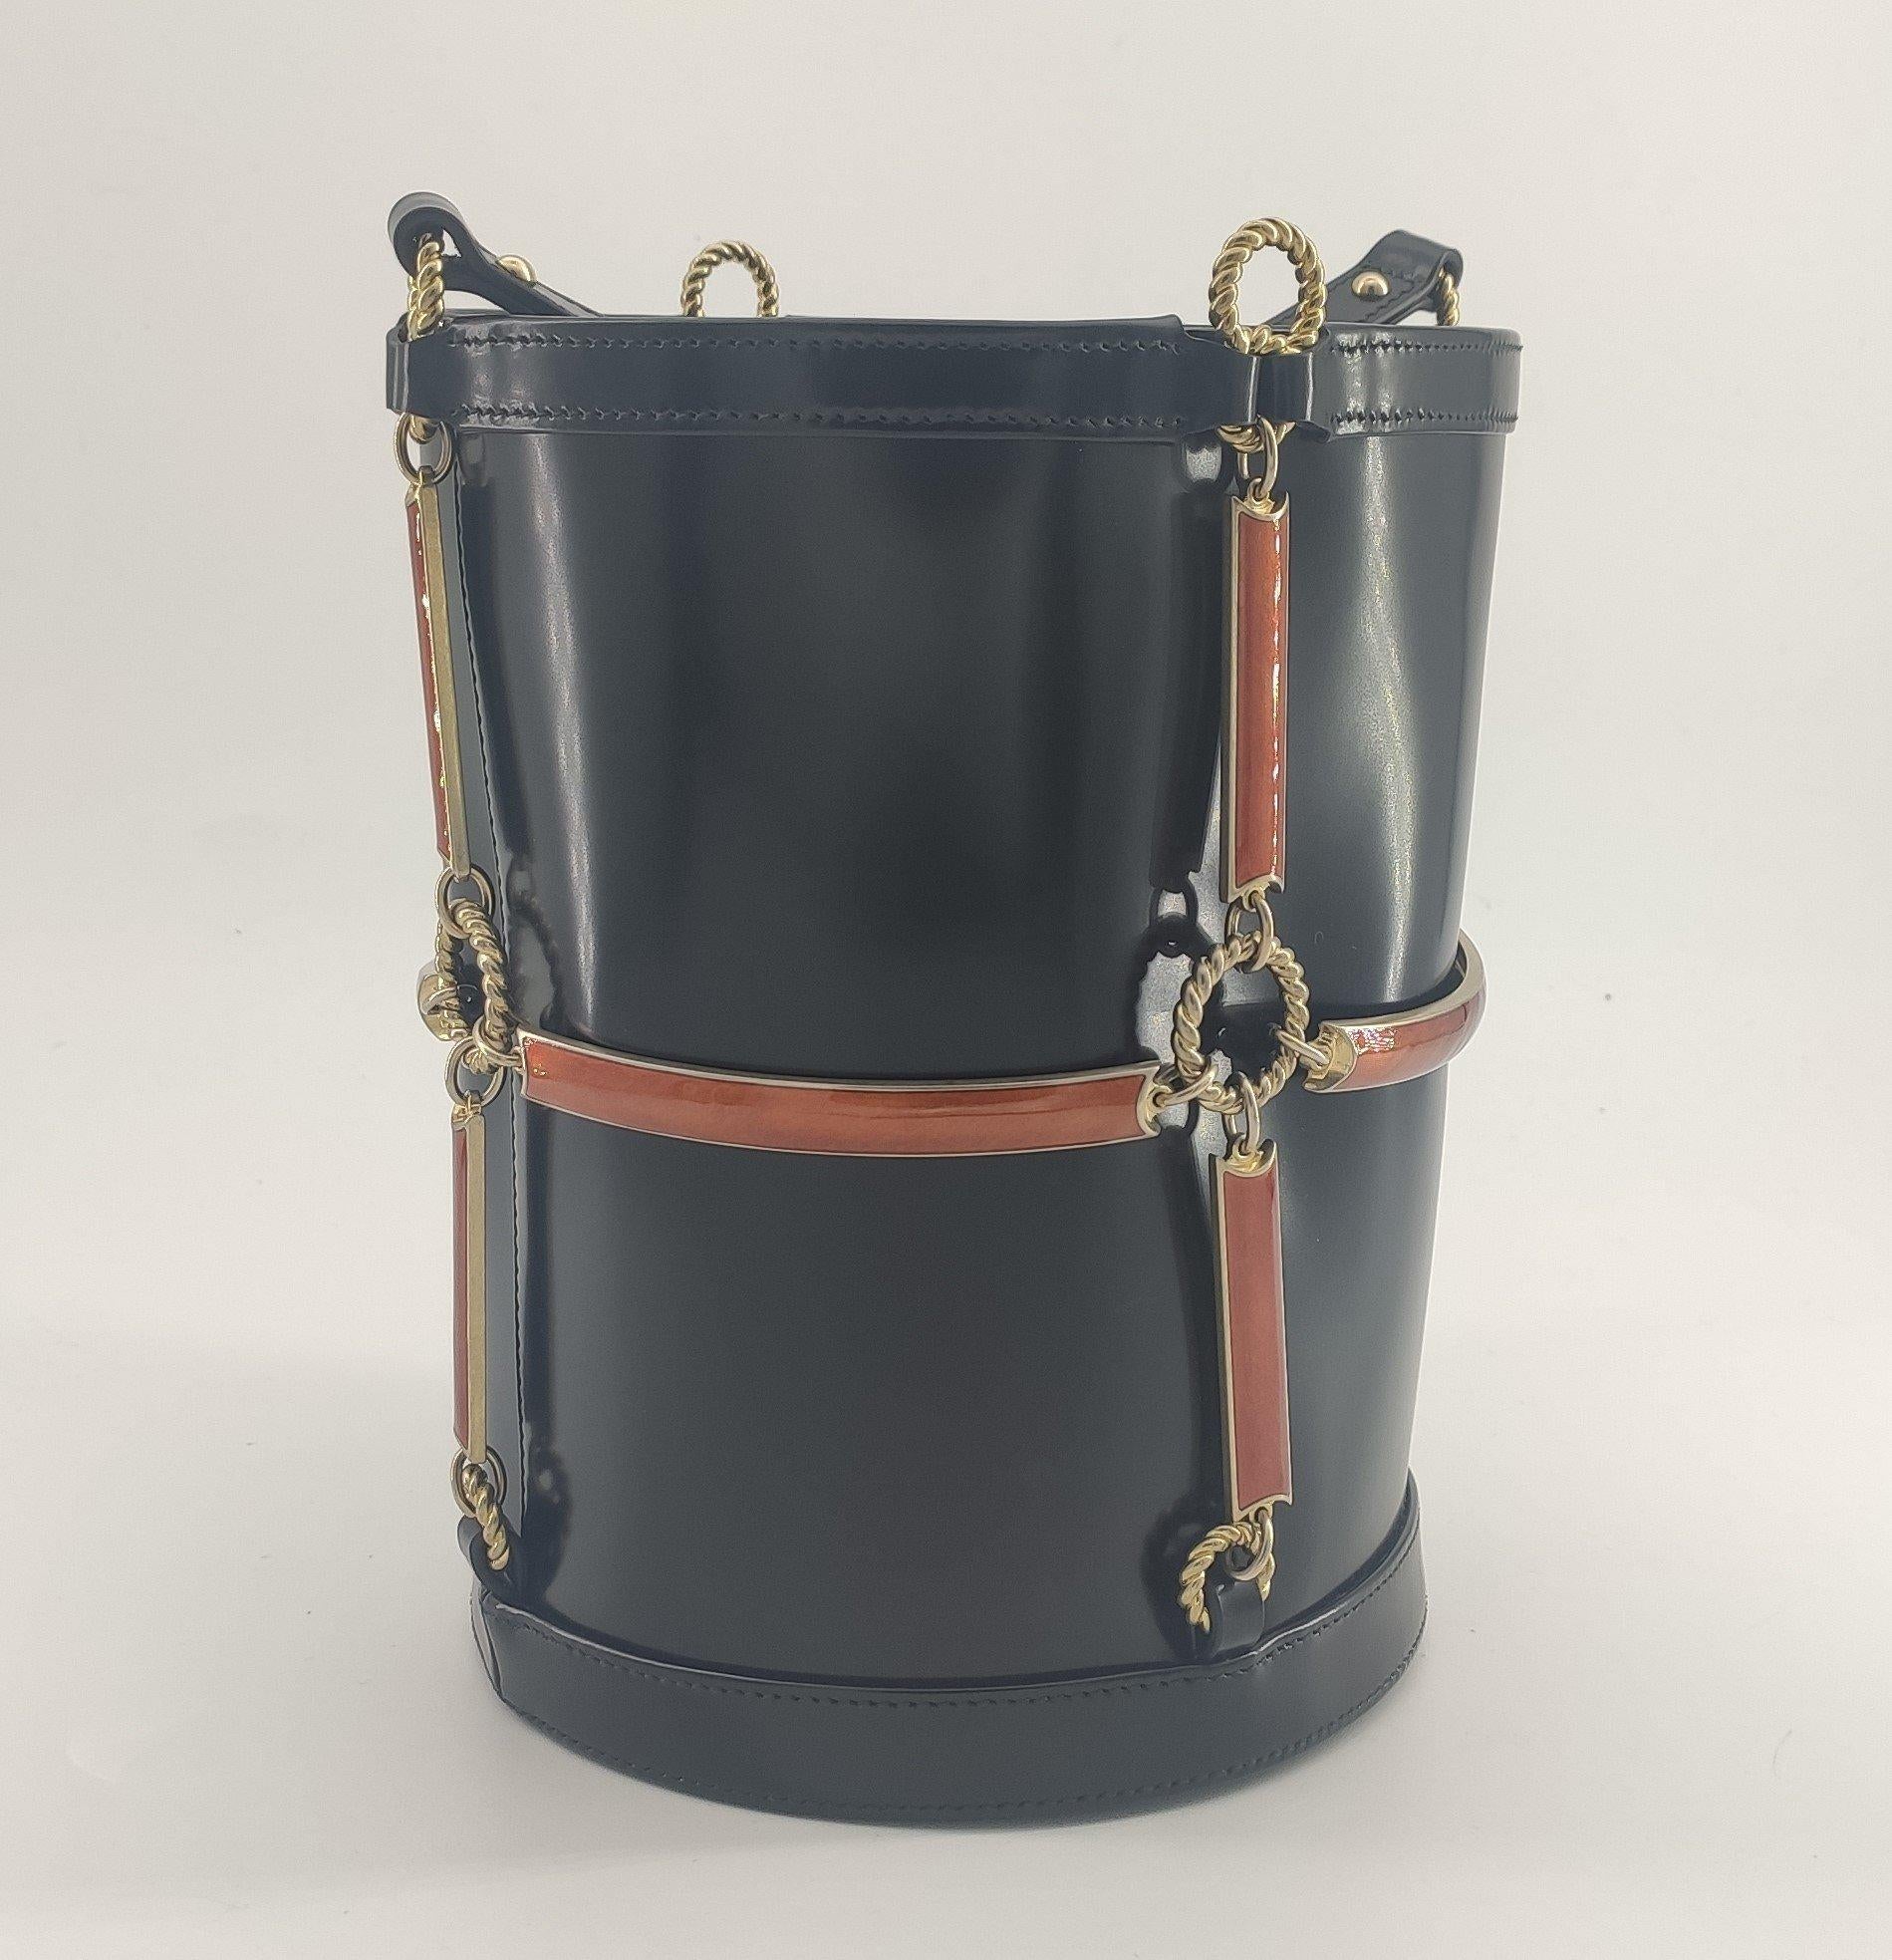 - Designer: GUCCI
- Model: Horsebit
- Condition: Never worn. 
- Accessories: Dustbag, Box
- Measurements: Width: 18cm, Height: 22.5cm, Depth: 17cm, Strap: 96cm
- Exterior Material: Leather
- Exterior Color: Black
- Interior Material: Cloth
-